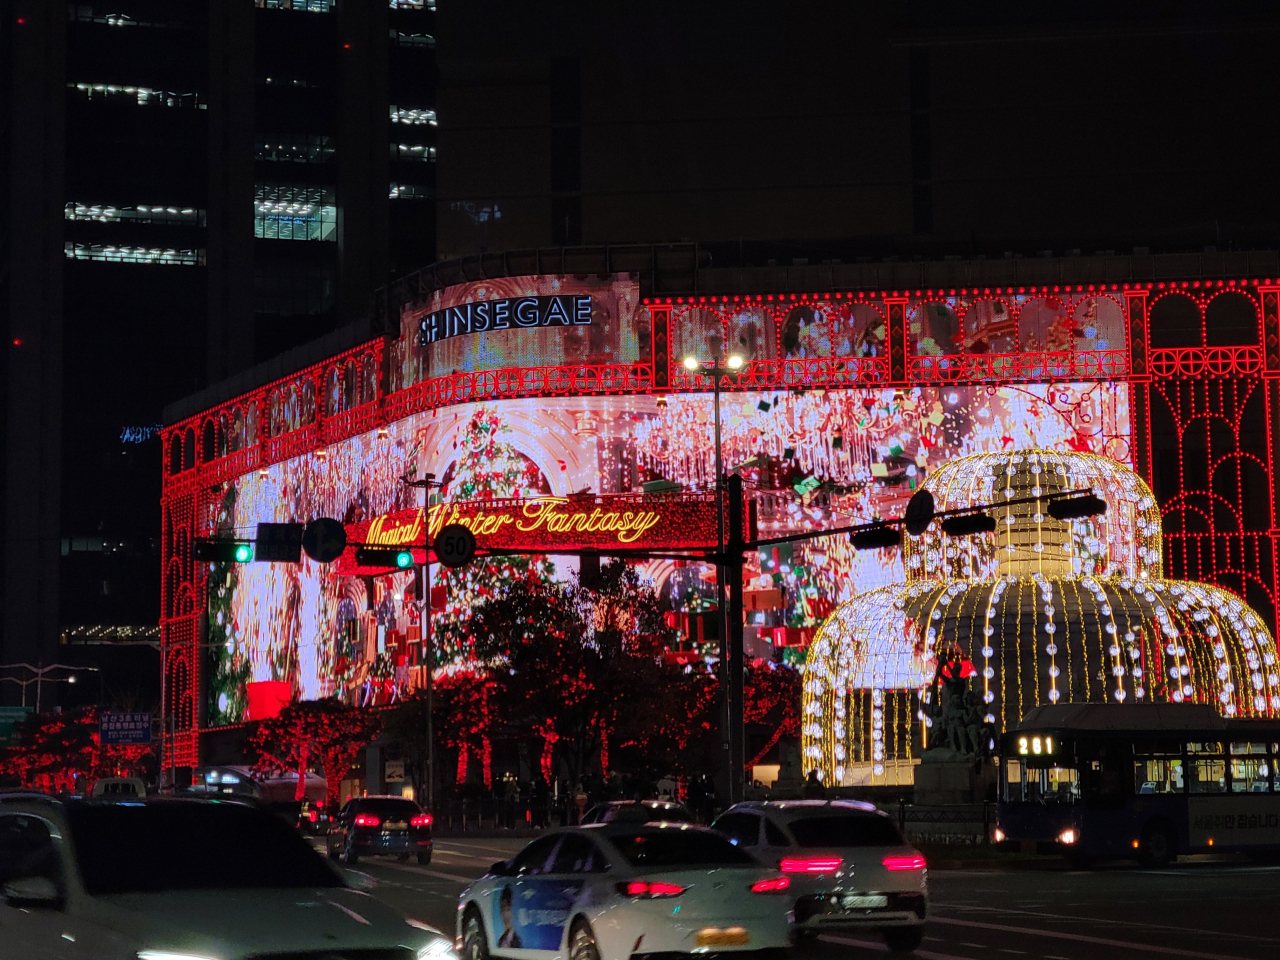 Shinsegae Department Store's Christmas-themed media facade is lit up on Nov. 20. (Park Yuna/The Korea Herald)